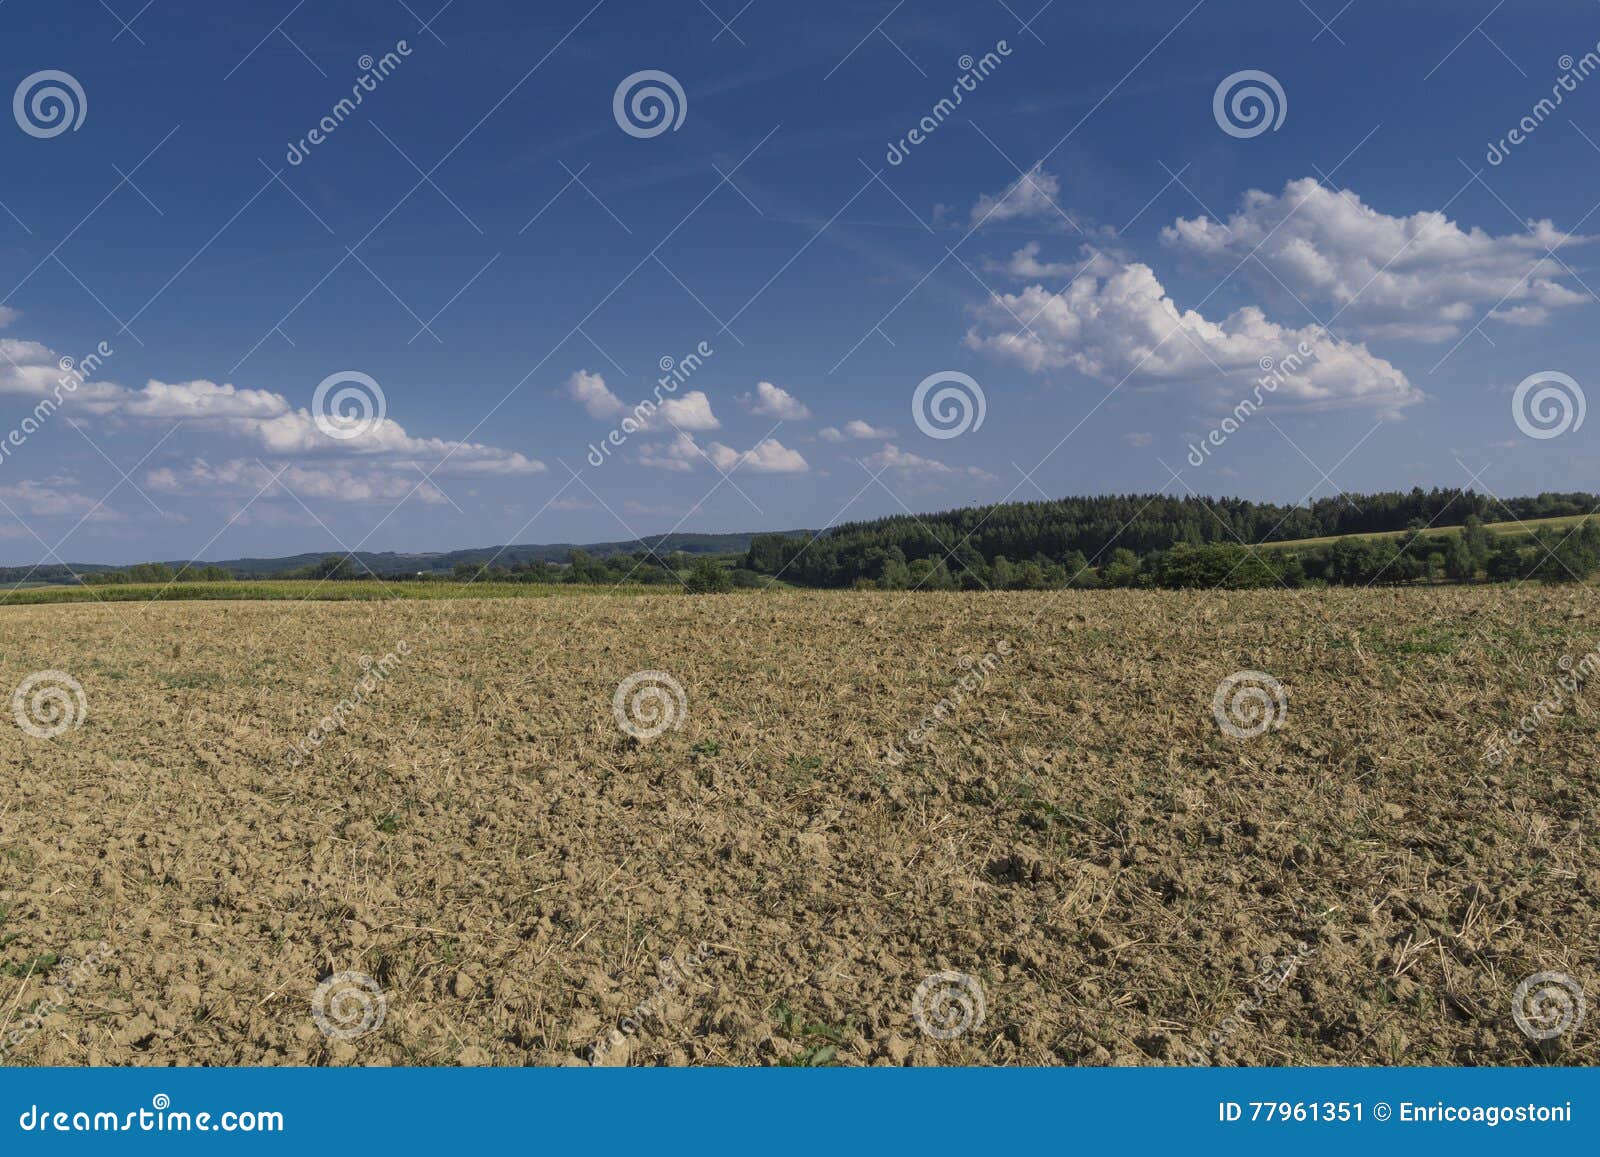 field in the region of hallertau, bayern (germany)